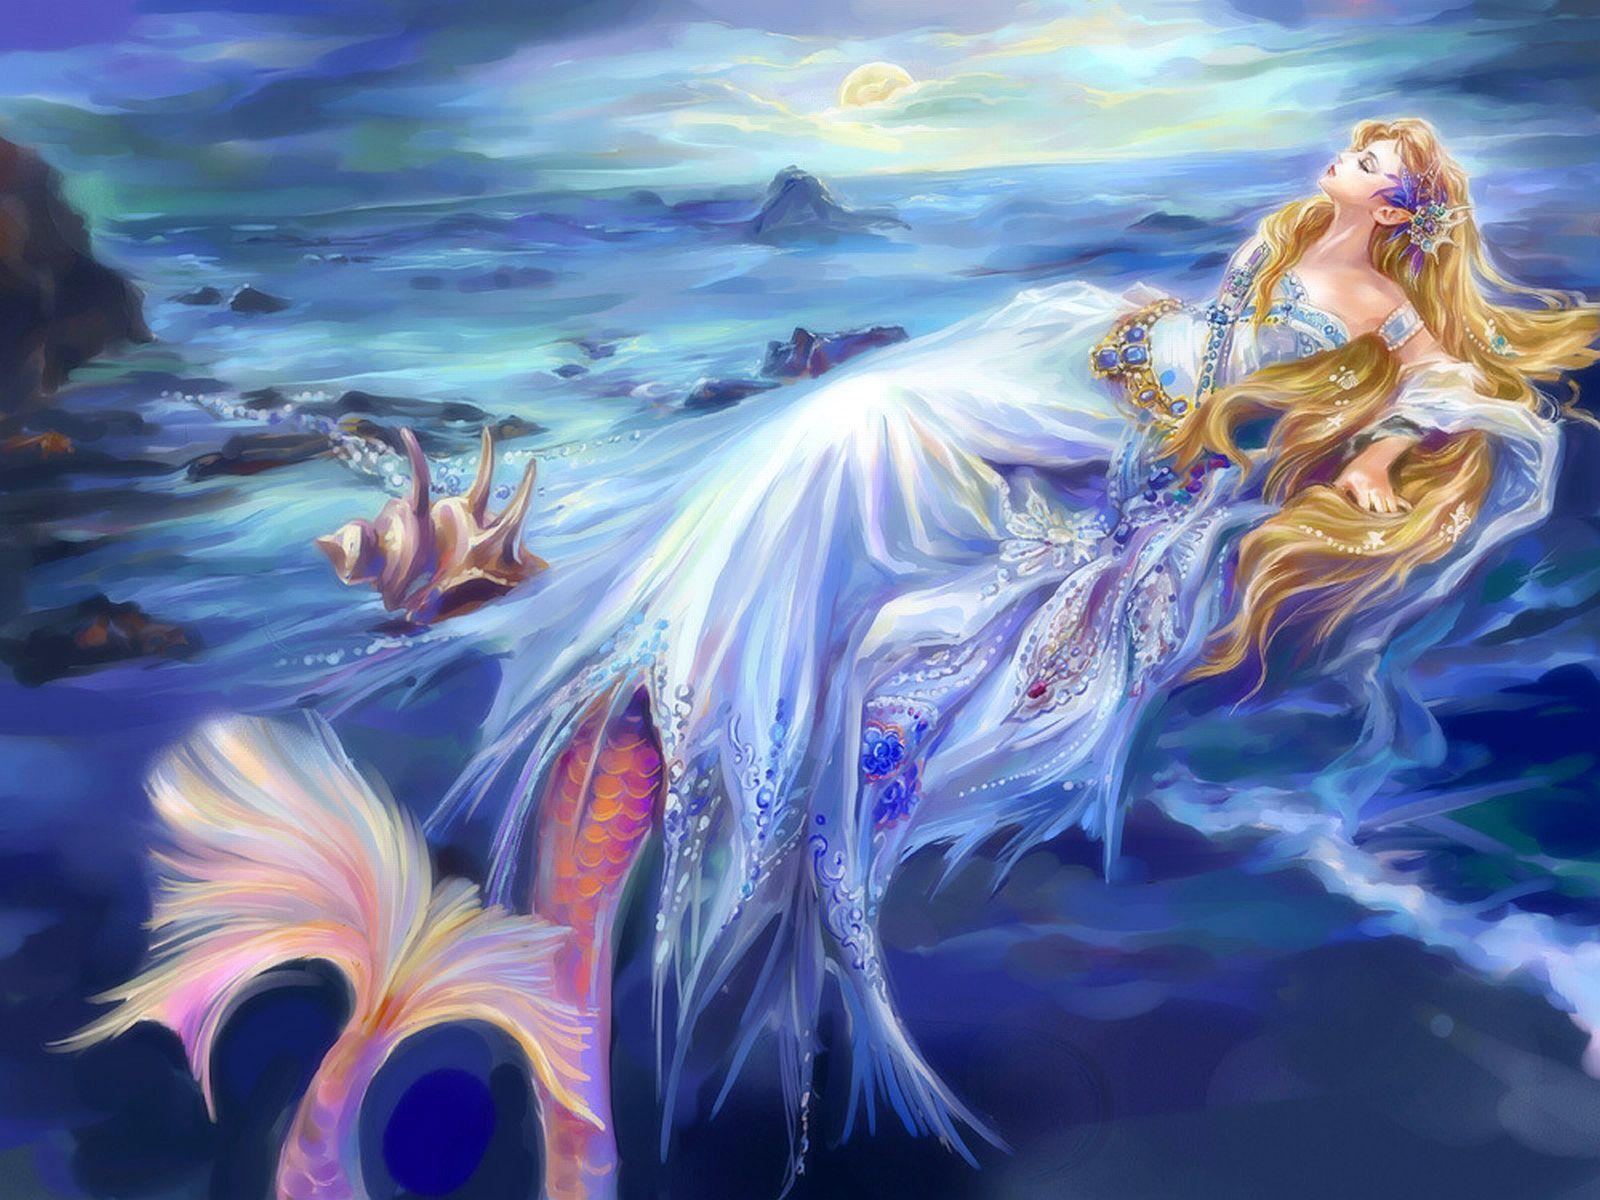 Anime Mermaid Images  Free Download on Freepik